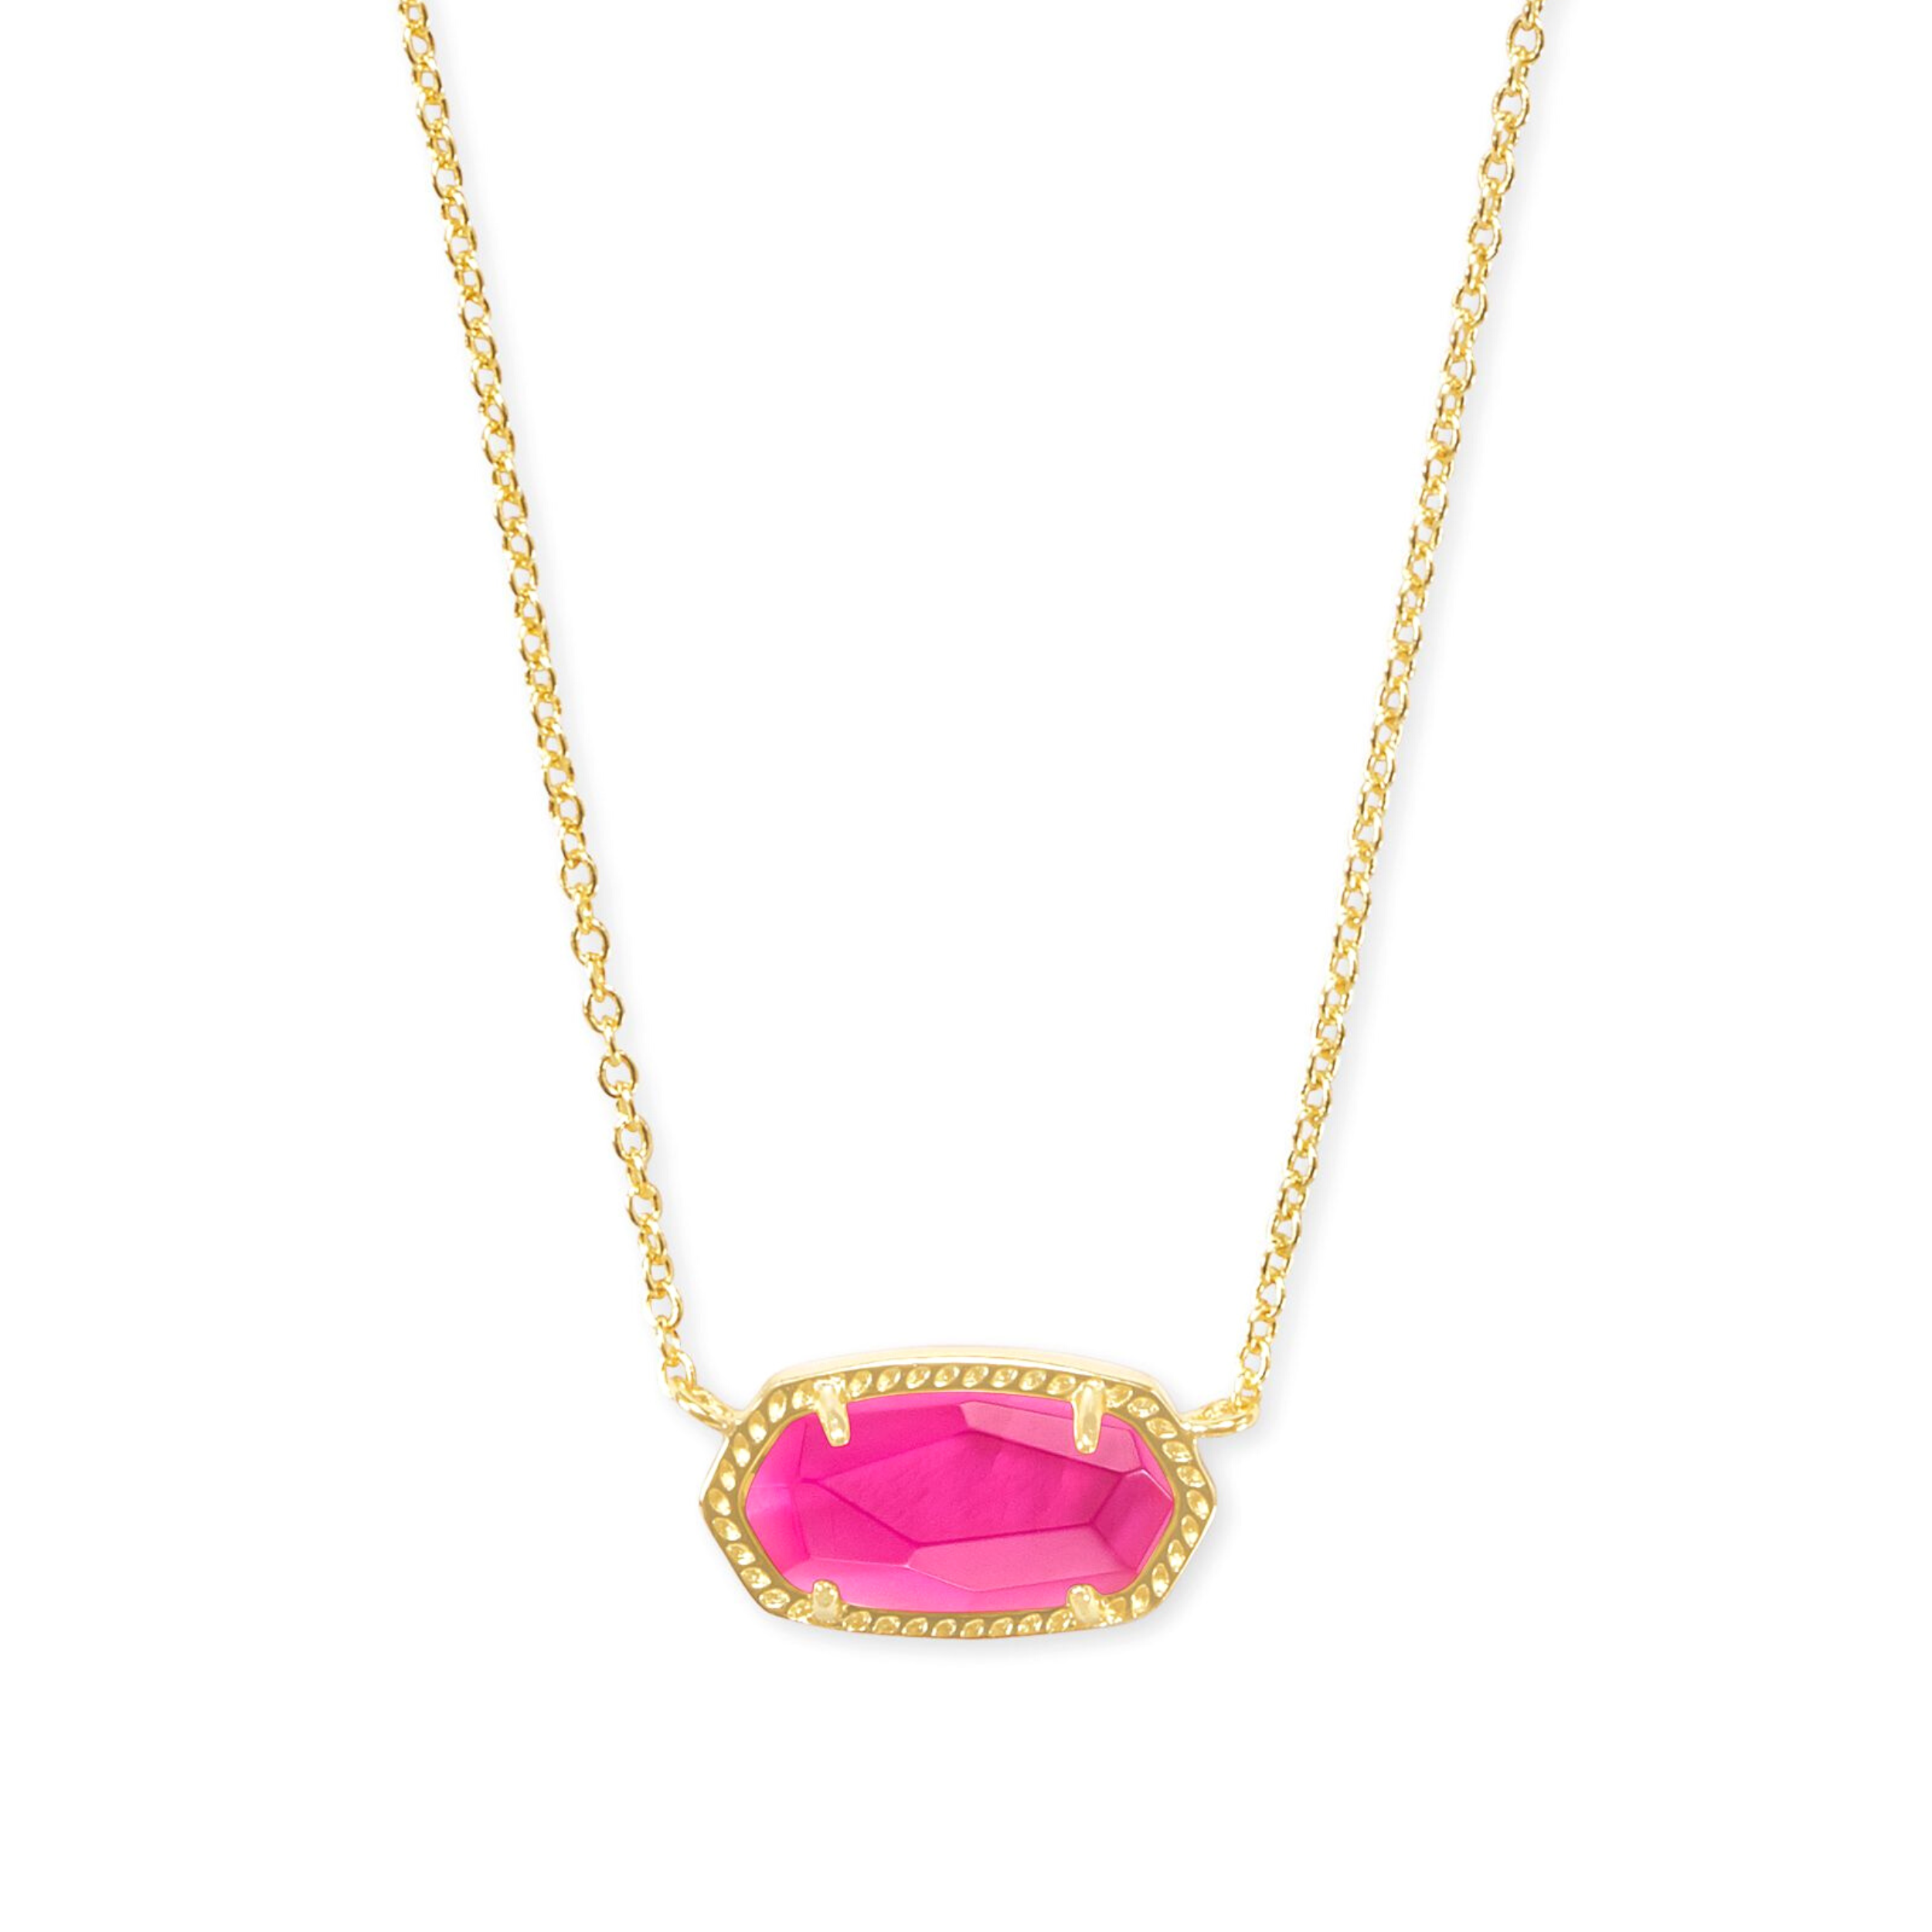 Kendra Scott | Elisa Gold Pendant Necklace in Azalea Illusion - Giddy Up Glamour Boutique